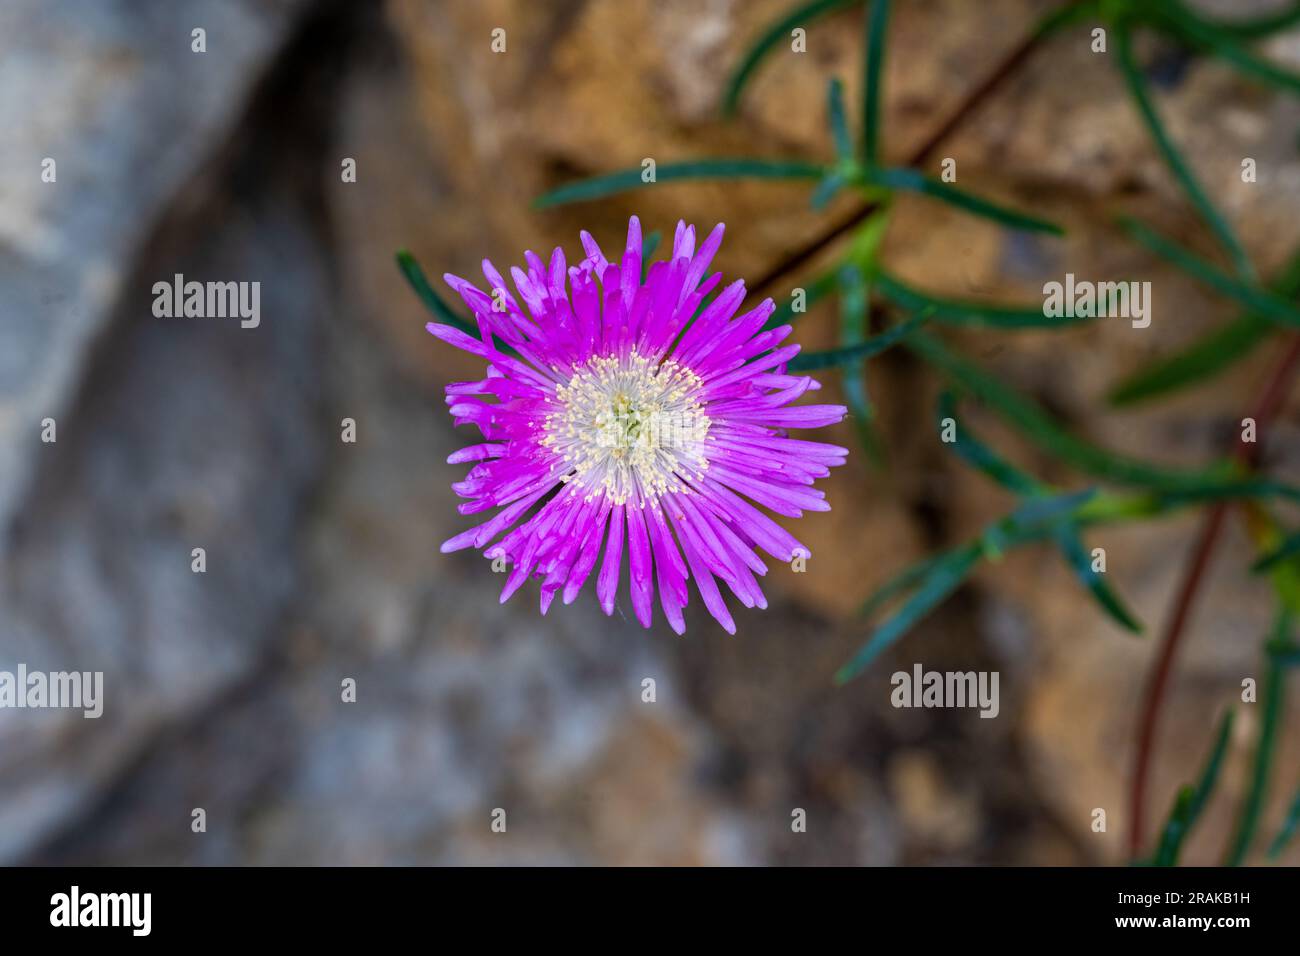 Hardy Rosa Pianta di ghiaccio (Delosperma cooperi, Mesembryanthemum cooperi), fiore, nativo per l'Africa Foto Stock